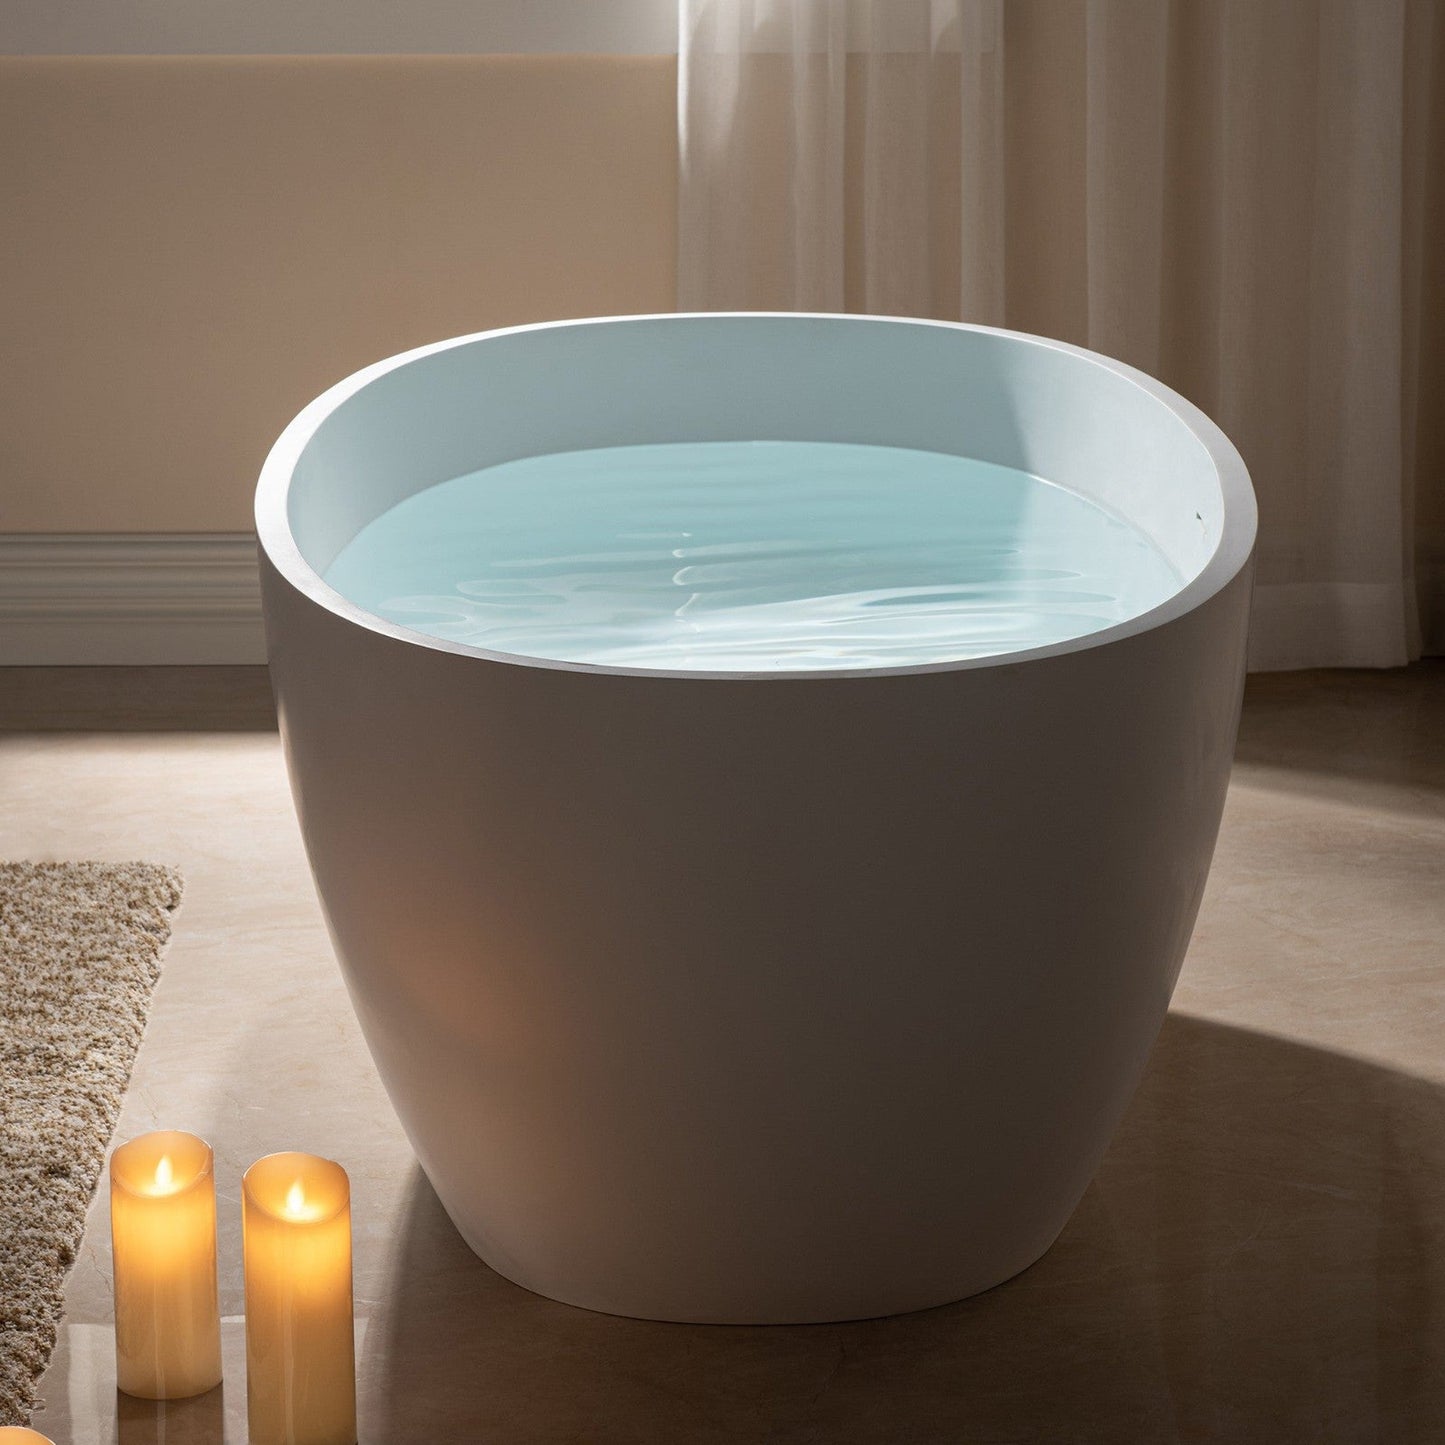 WoodBridge B0044 59" Matte White Luxury Contemporary Solid Surface Freestanding Bathtub